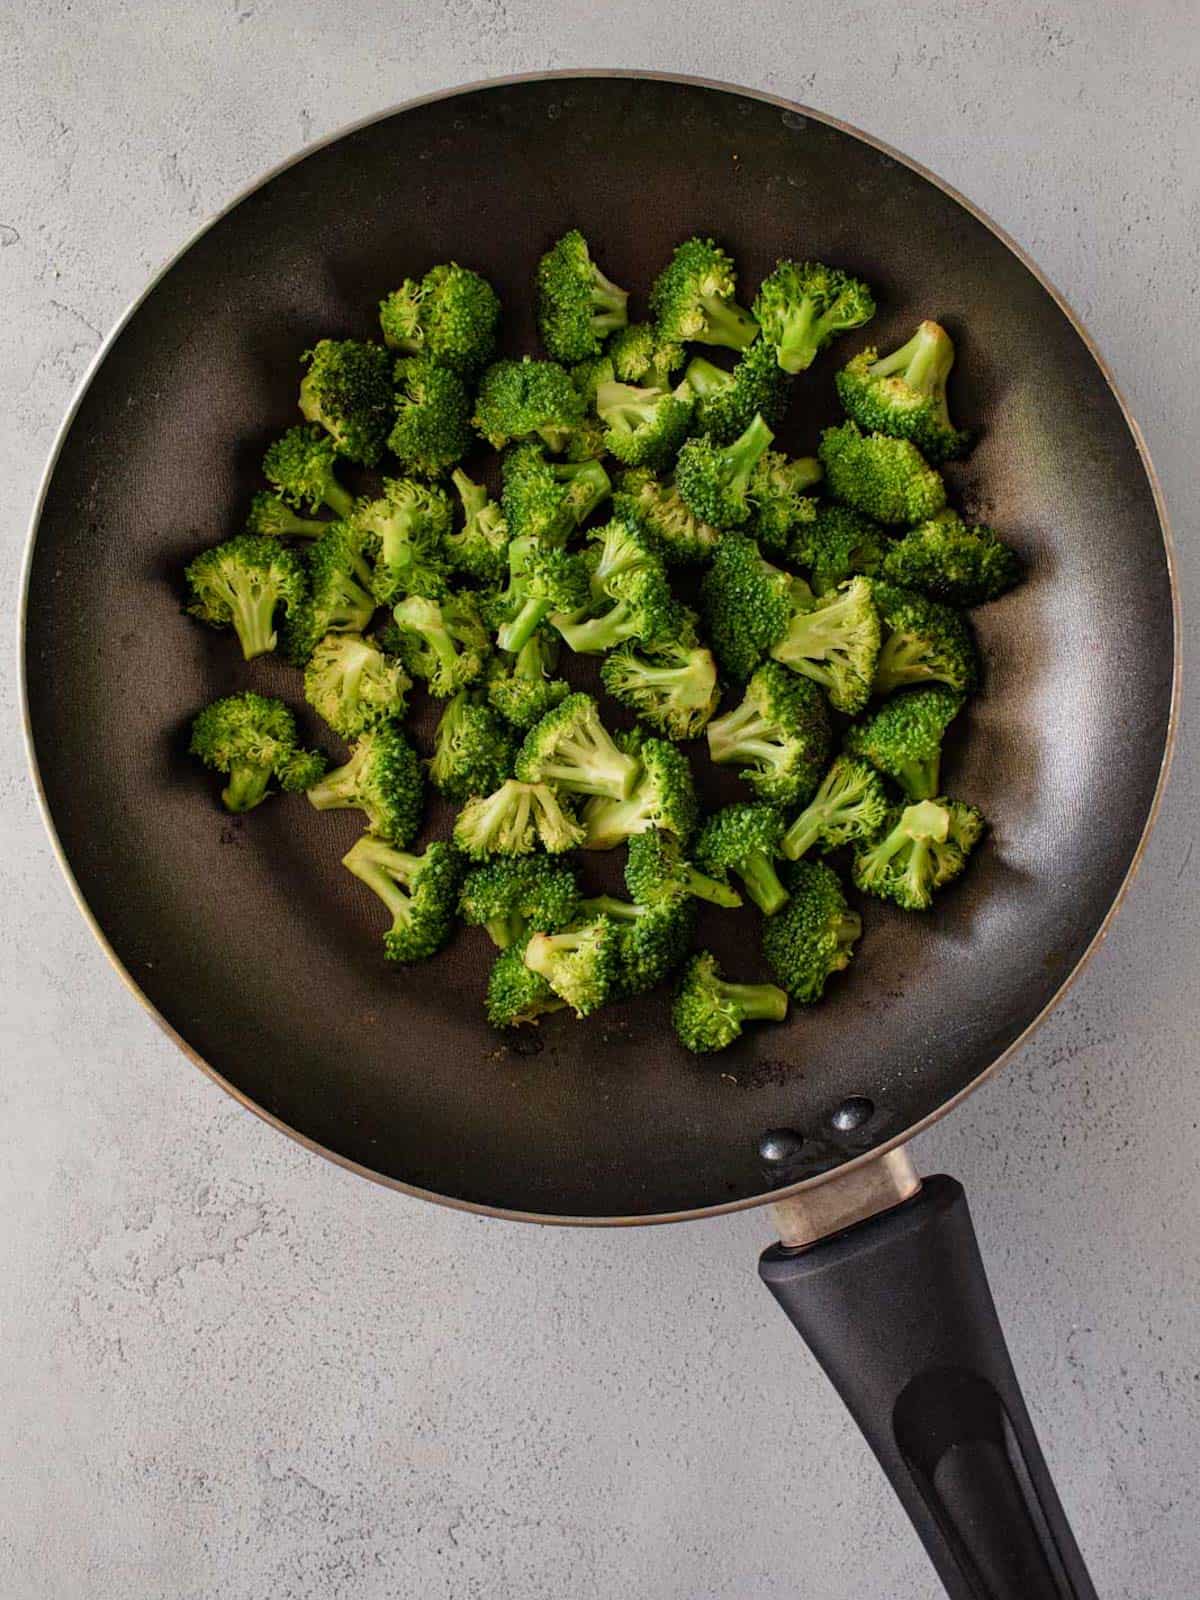 Broccoli in a skillet.